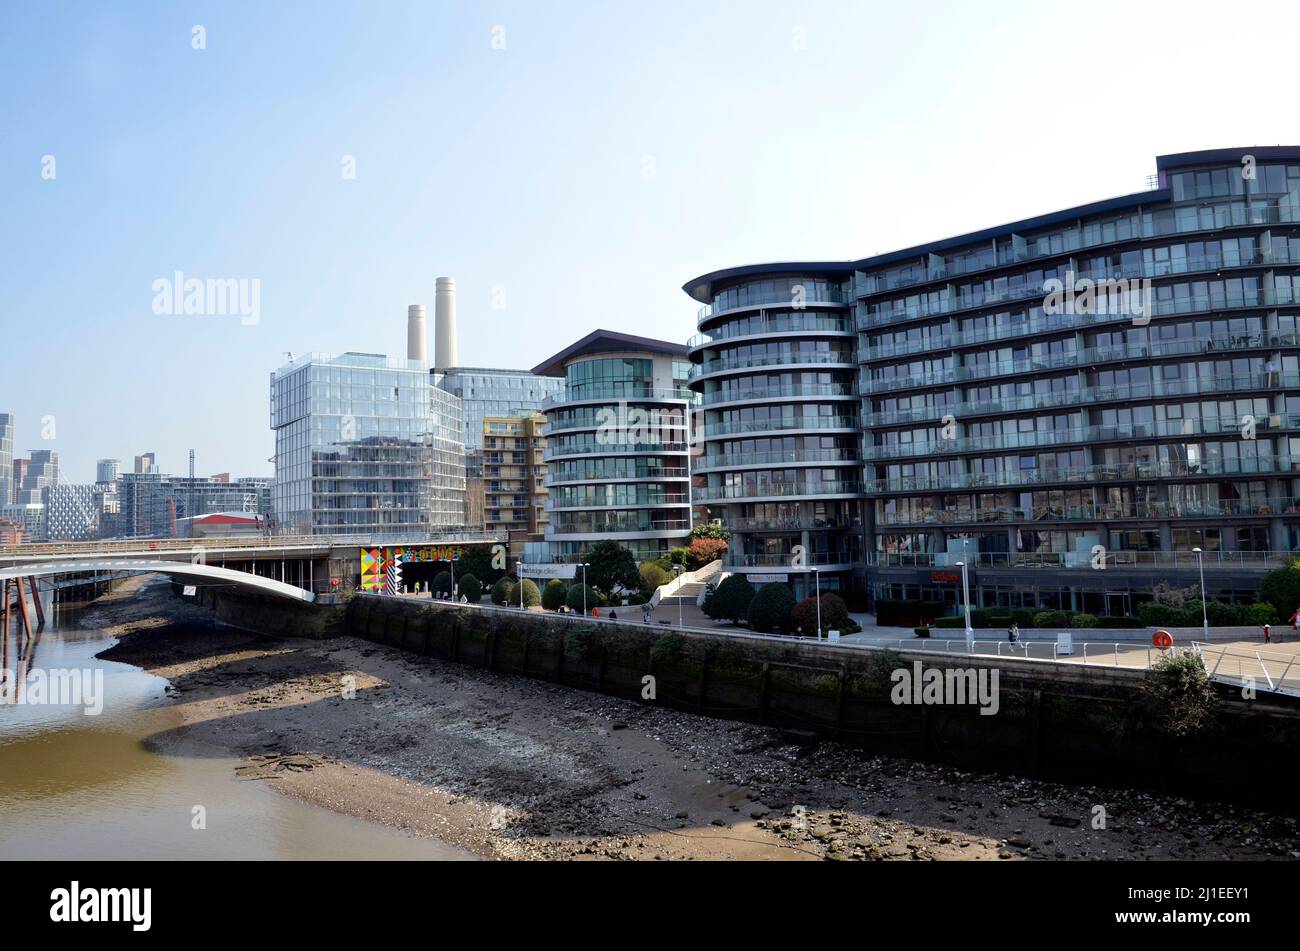 The Chelsea Bridge Wharf development in Battersea, South London Stock Photo